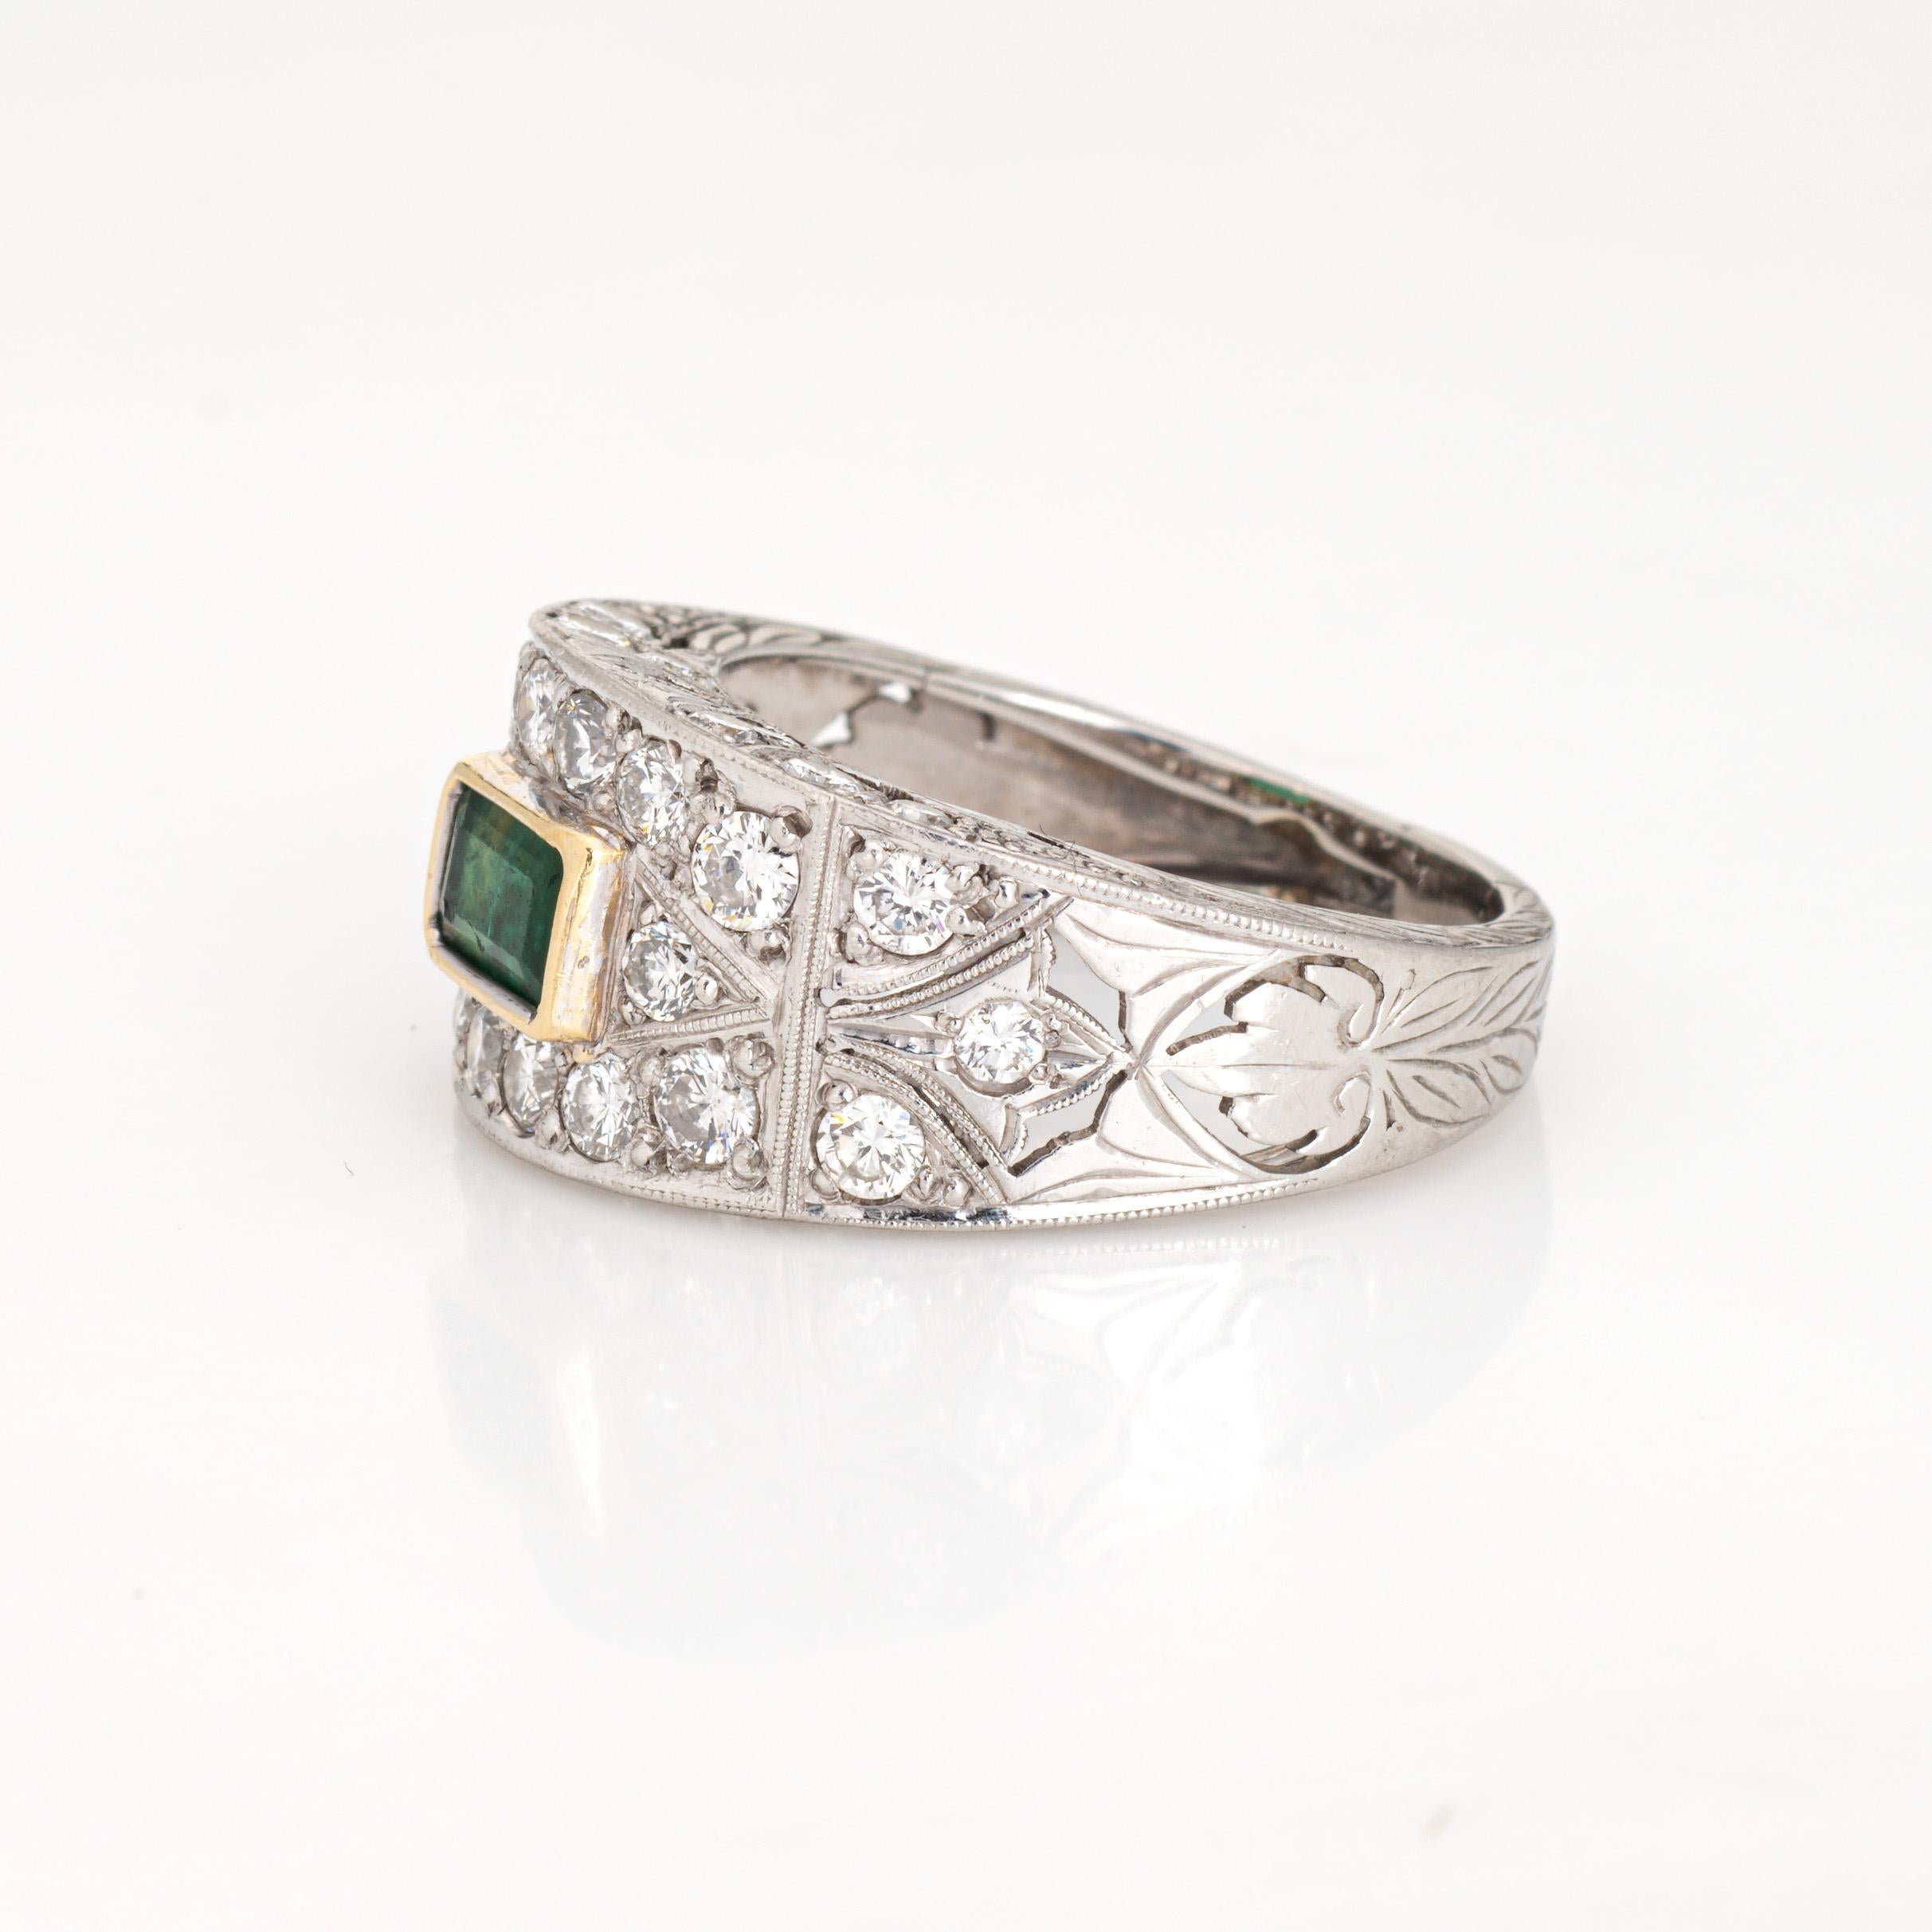 Emerald Cut Emerald Diamond Ring Estate Etched Platinum Wide Band Sz 7.5 Estate Jewelry For Sale